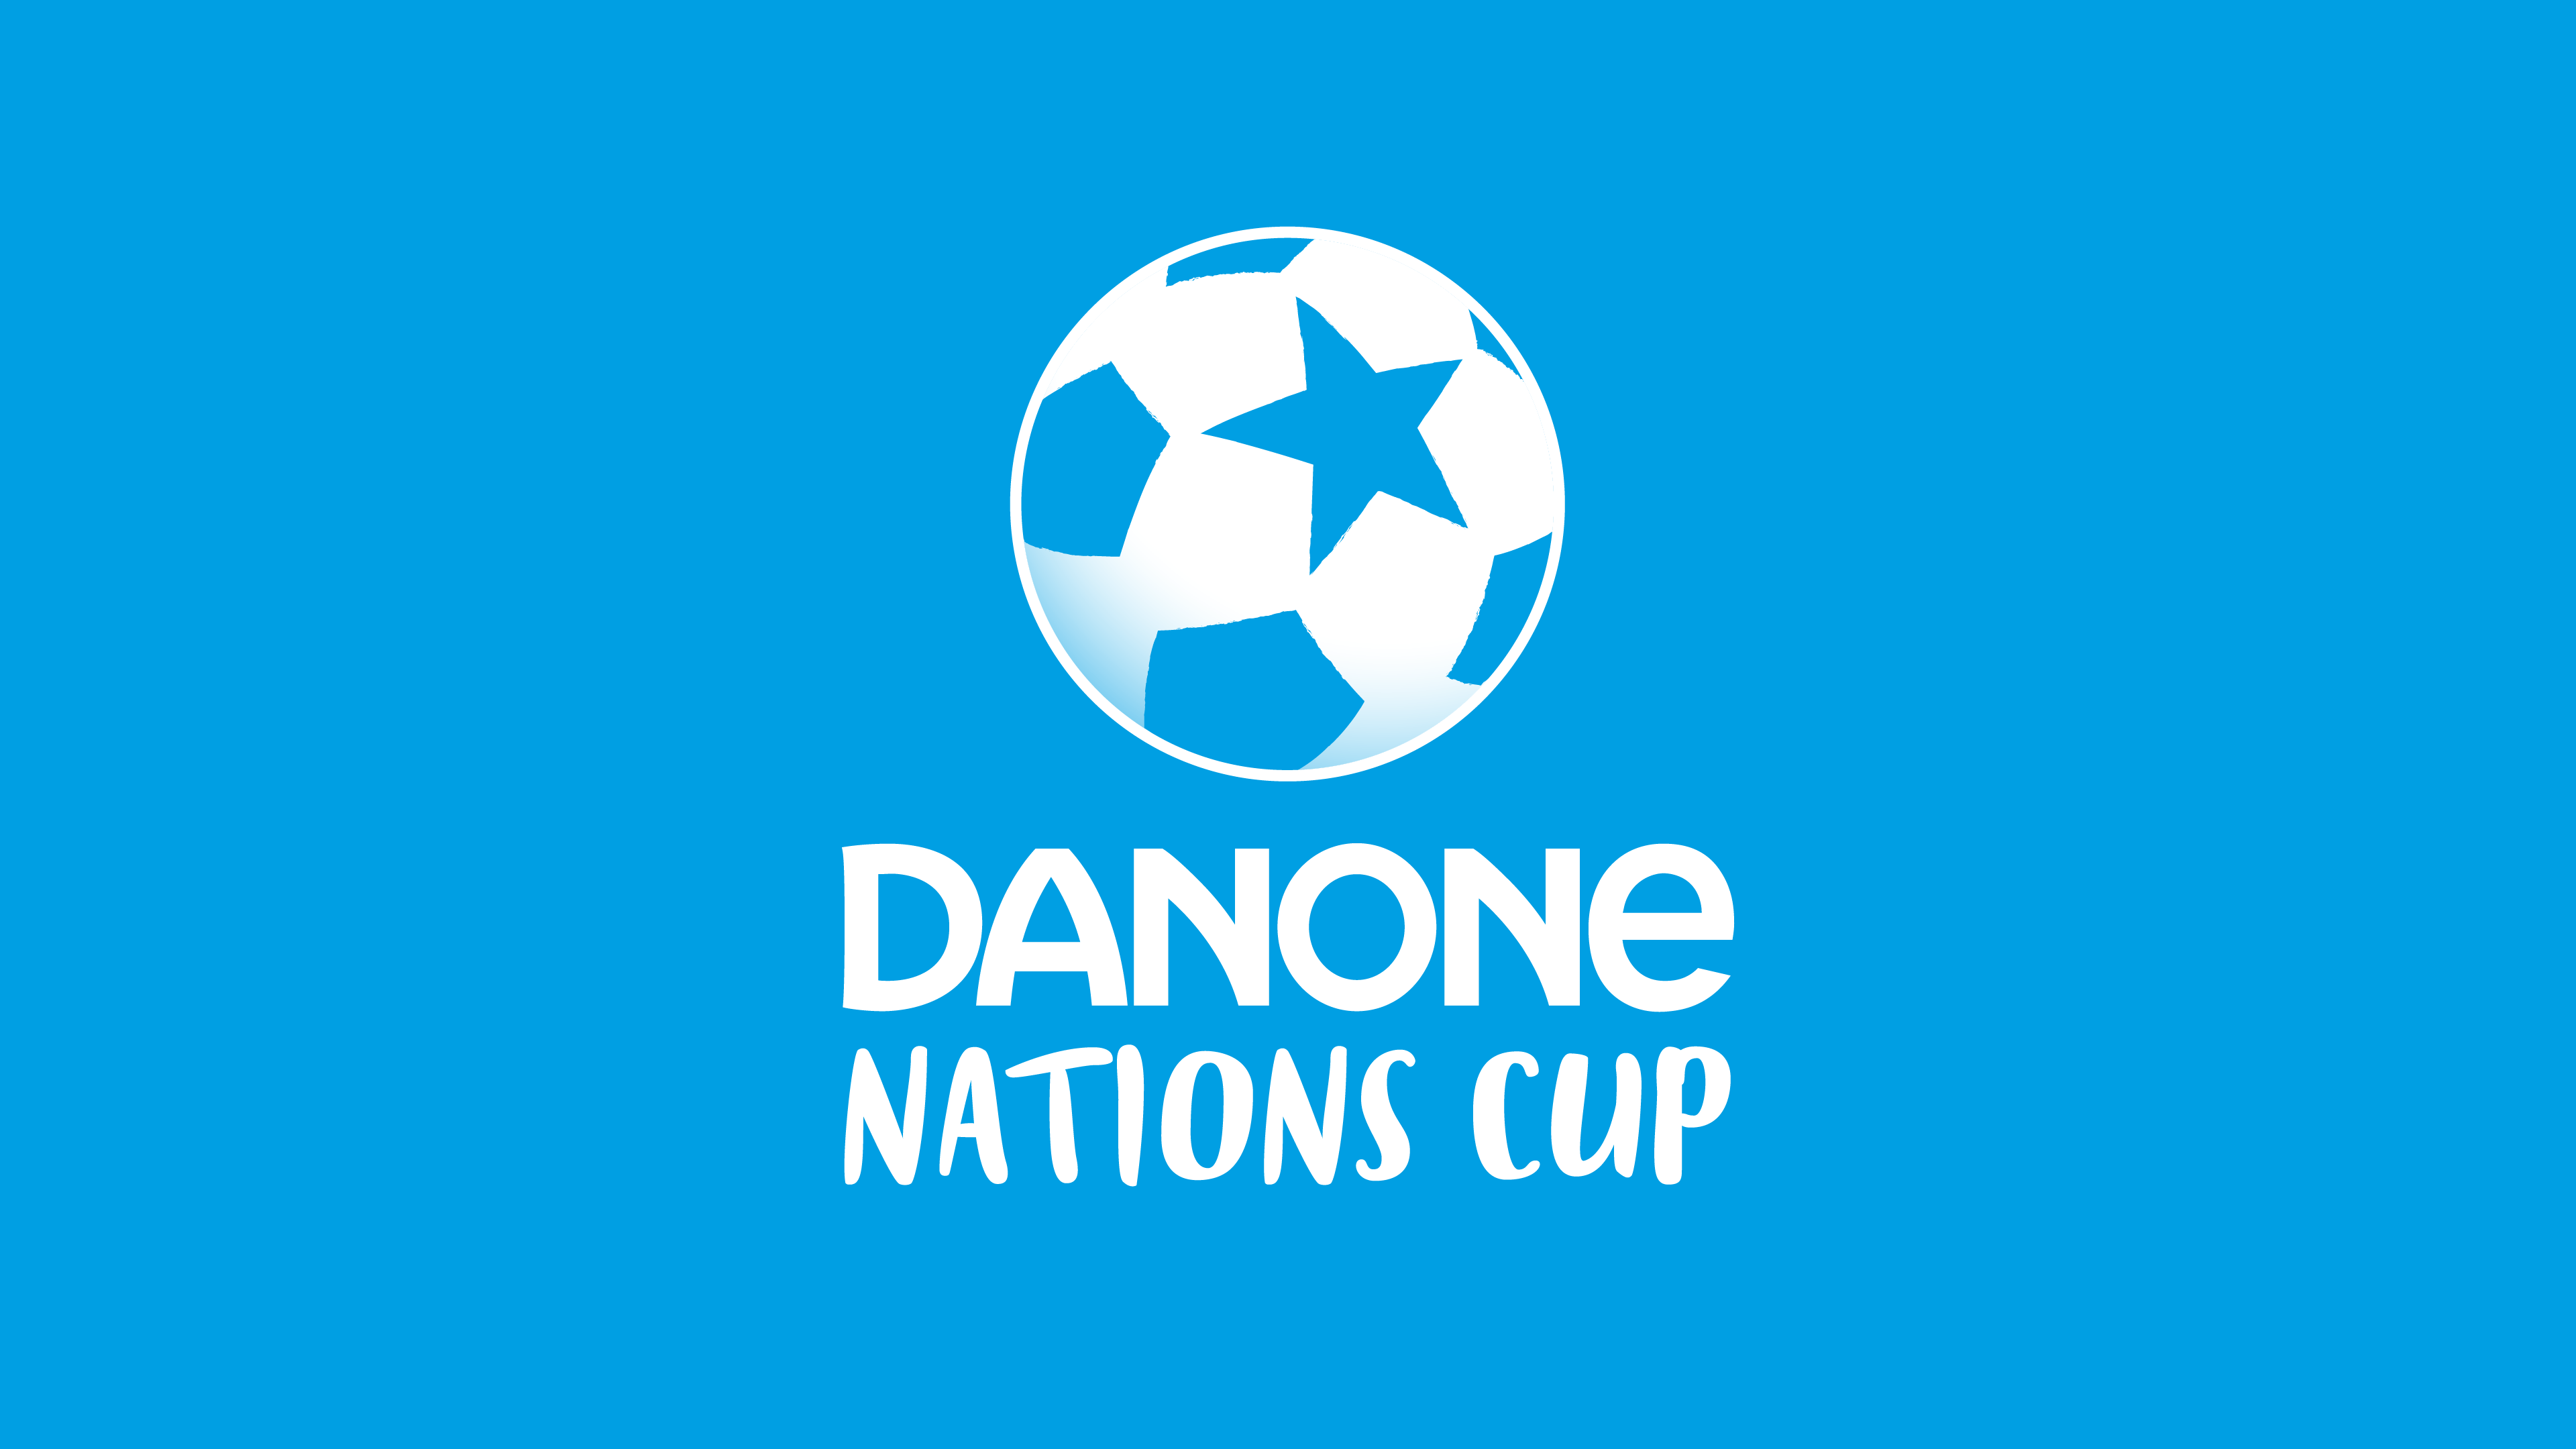 Danone logo variant 3